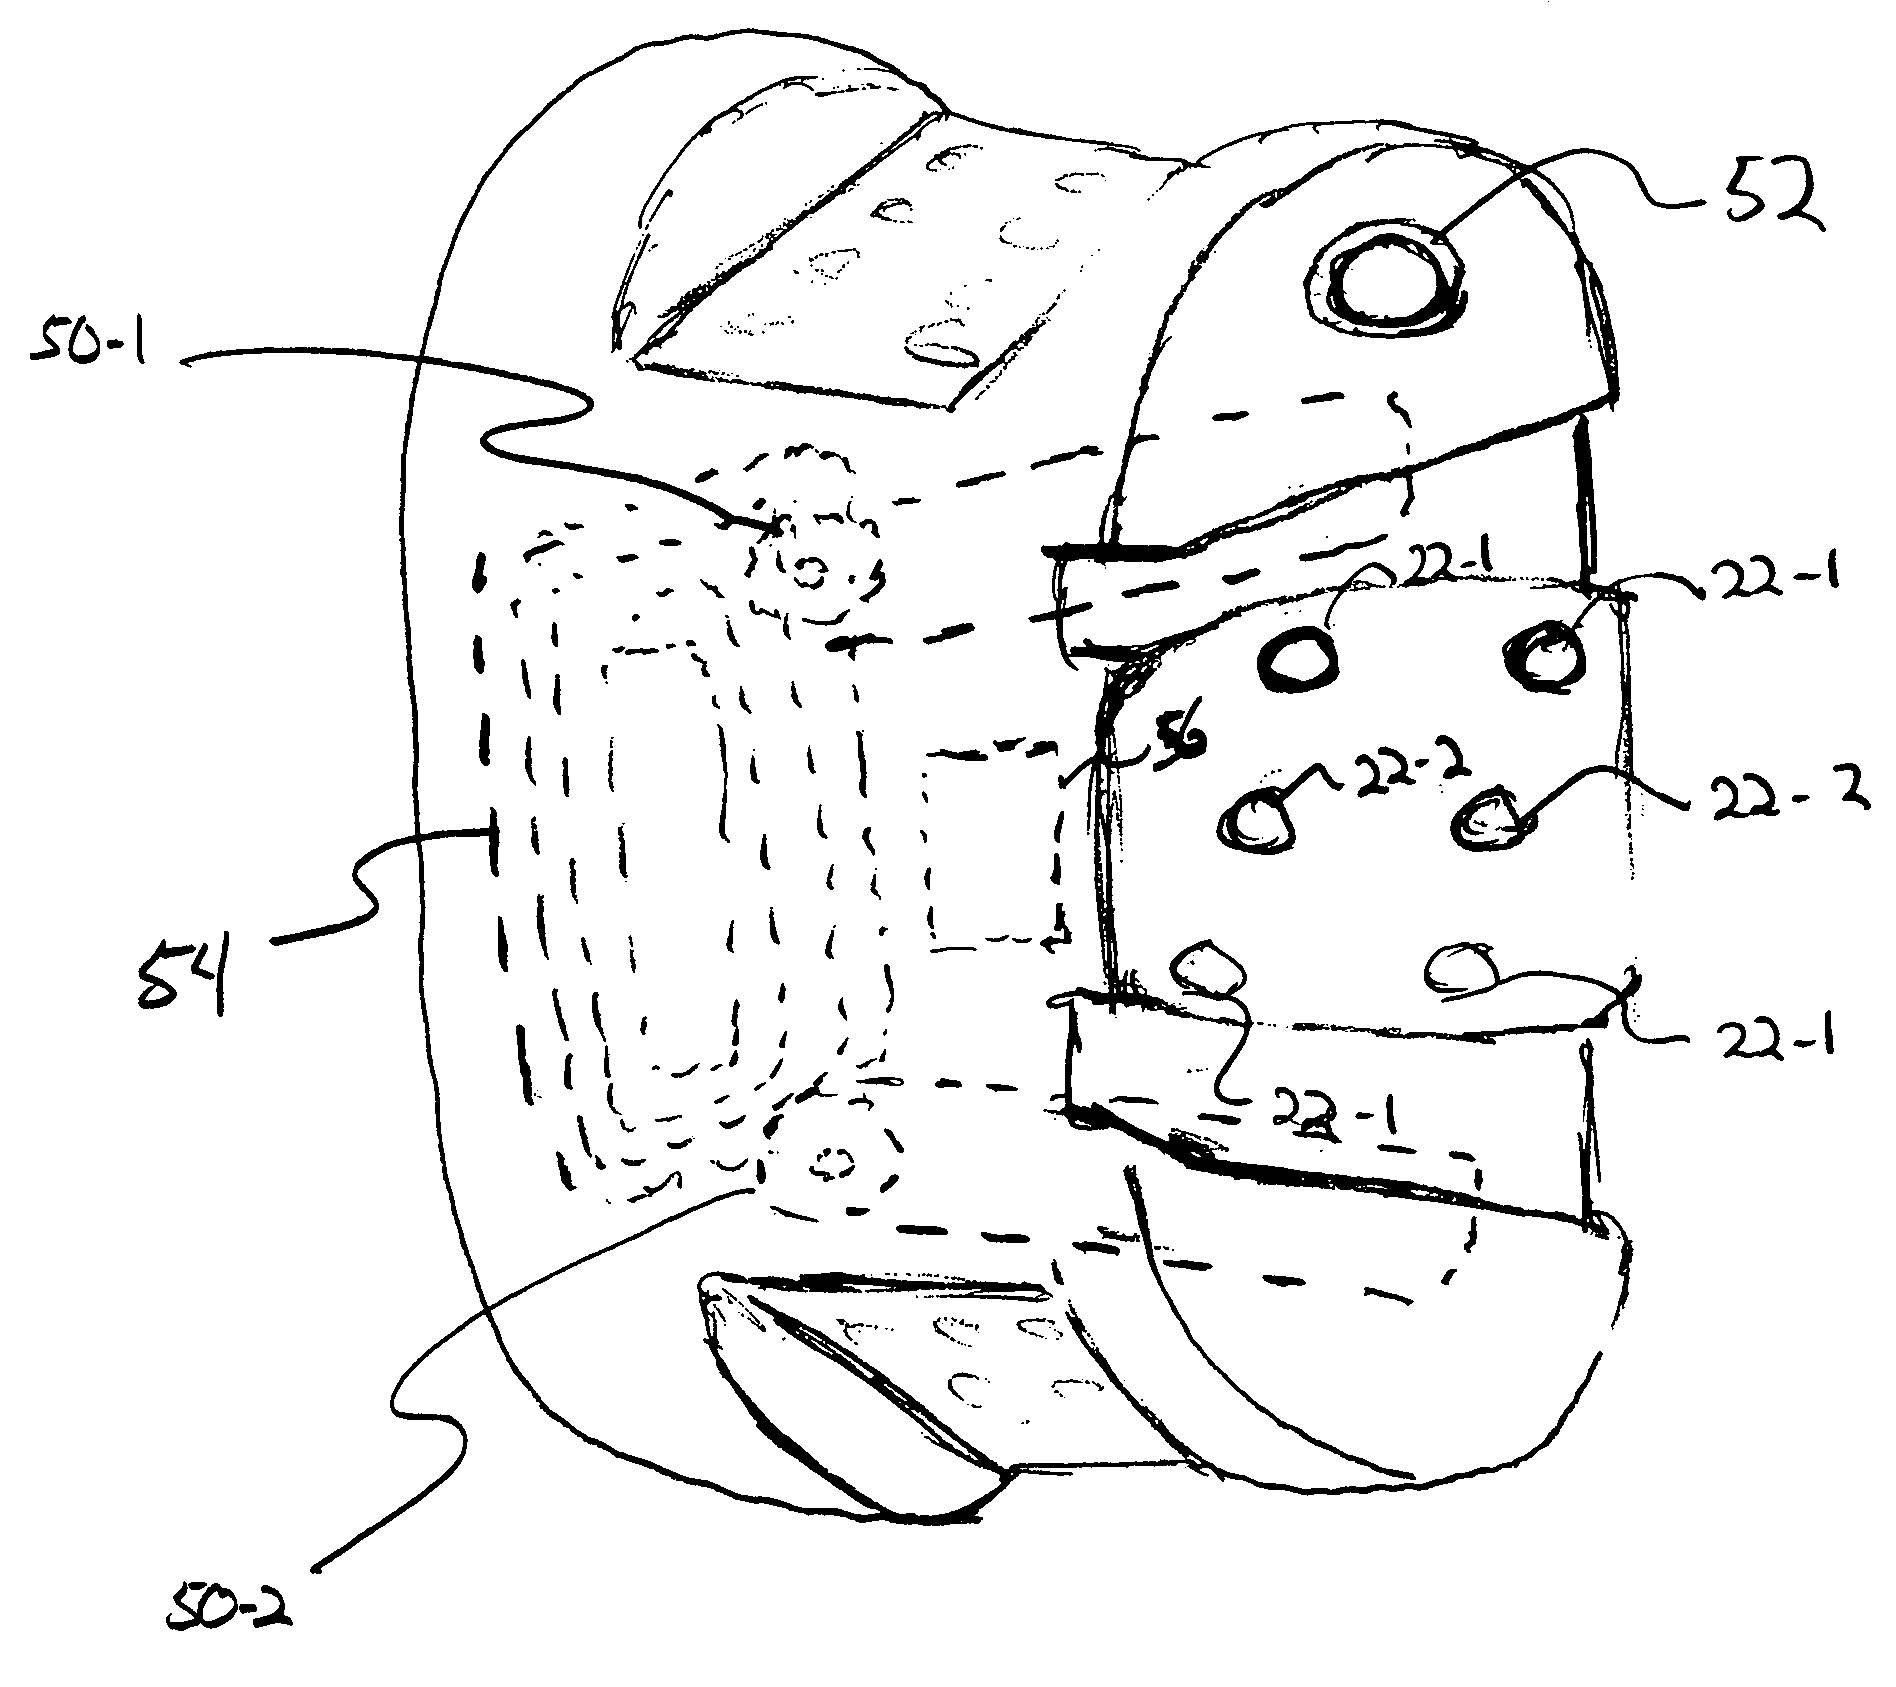 Intraoral bite spacer and illumination apparatus